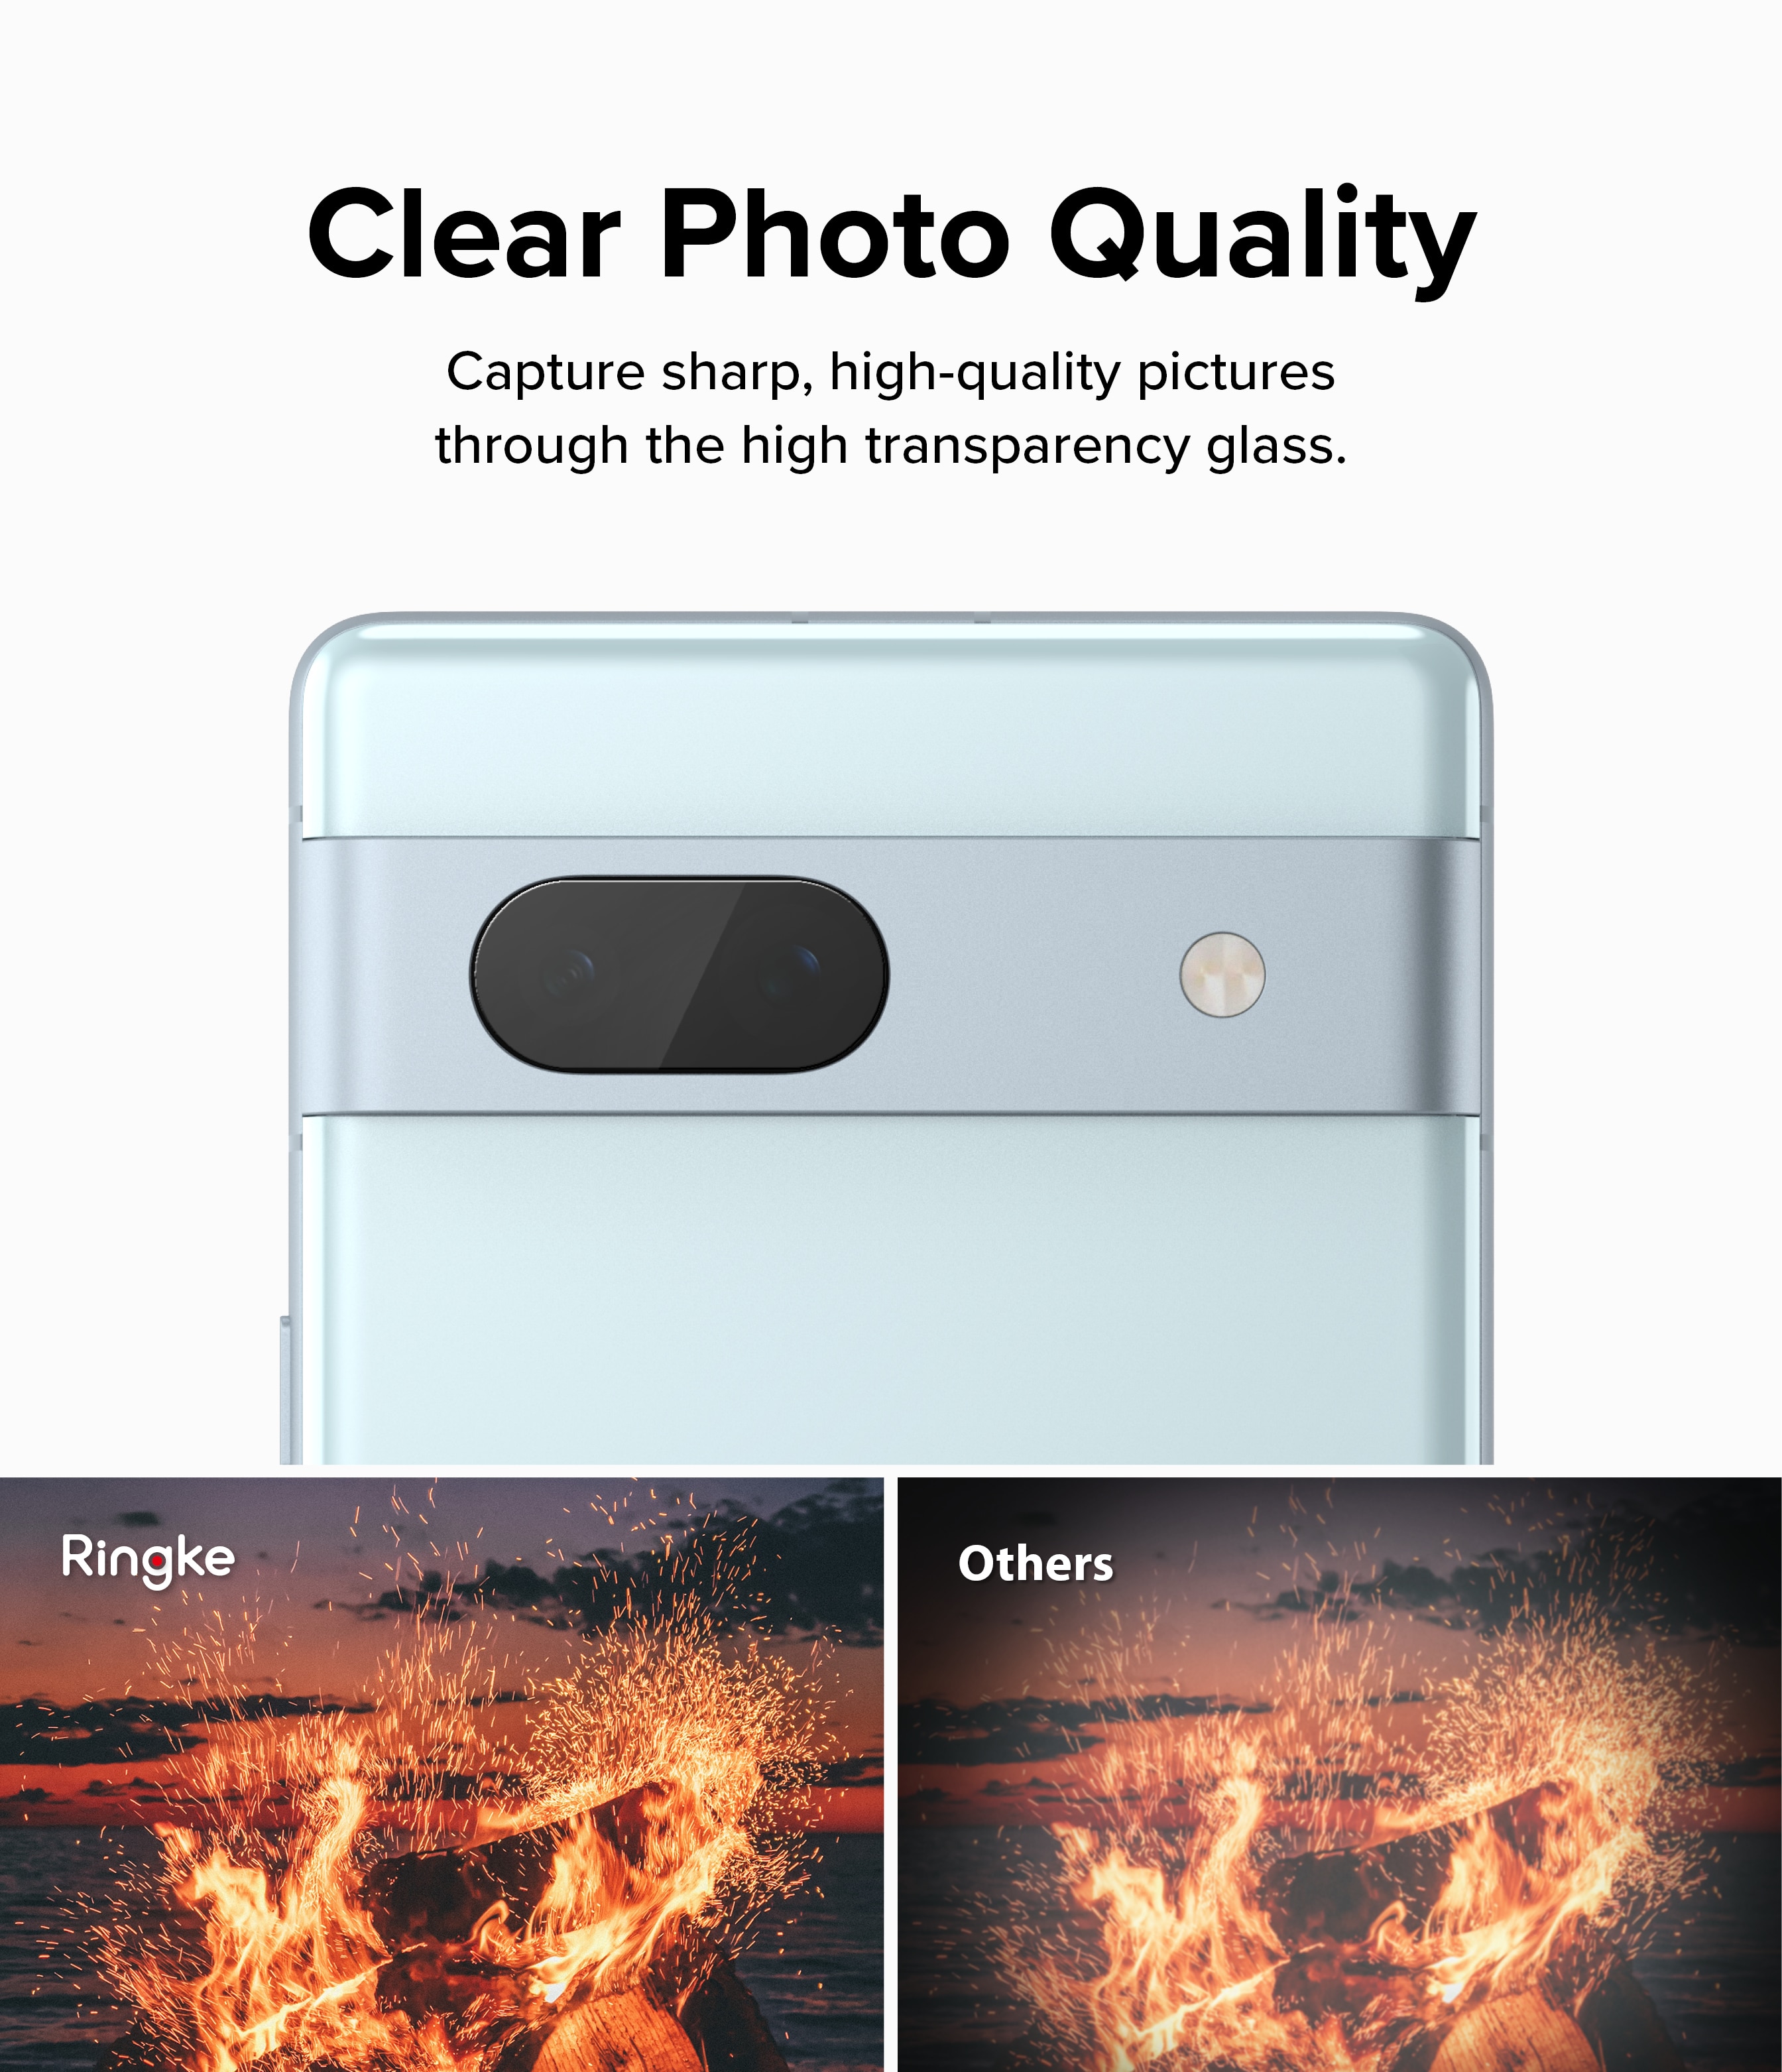 Camera Protector Glass (3-pack) Google Pixel 7a Transparente